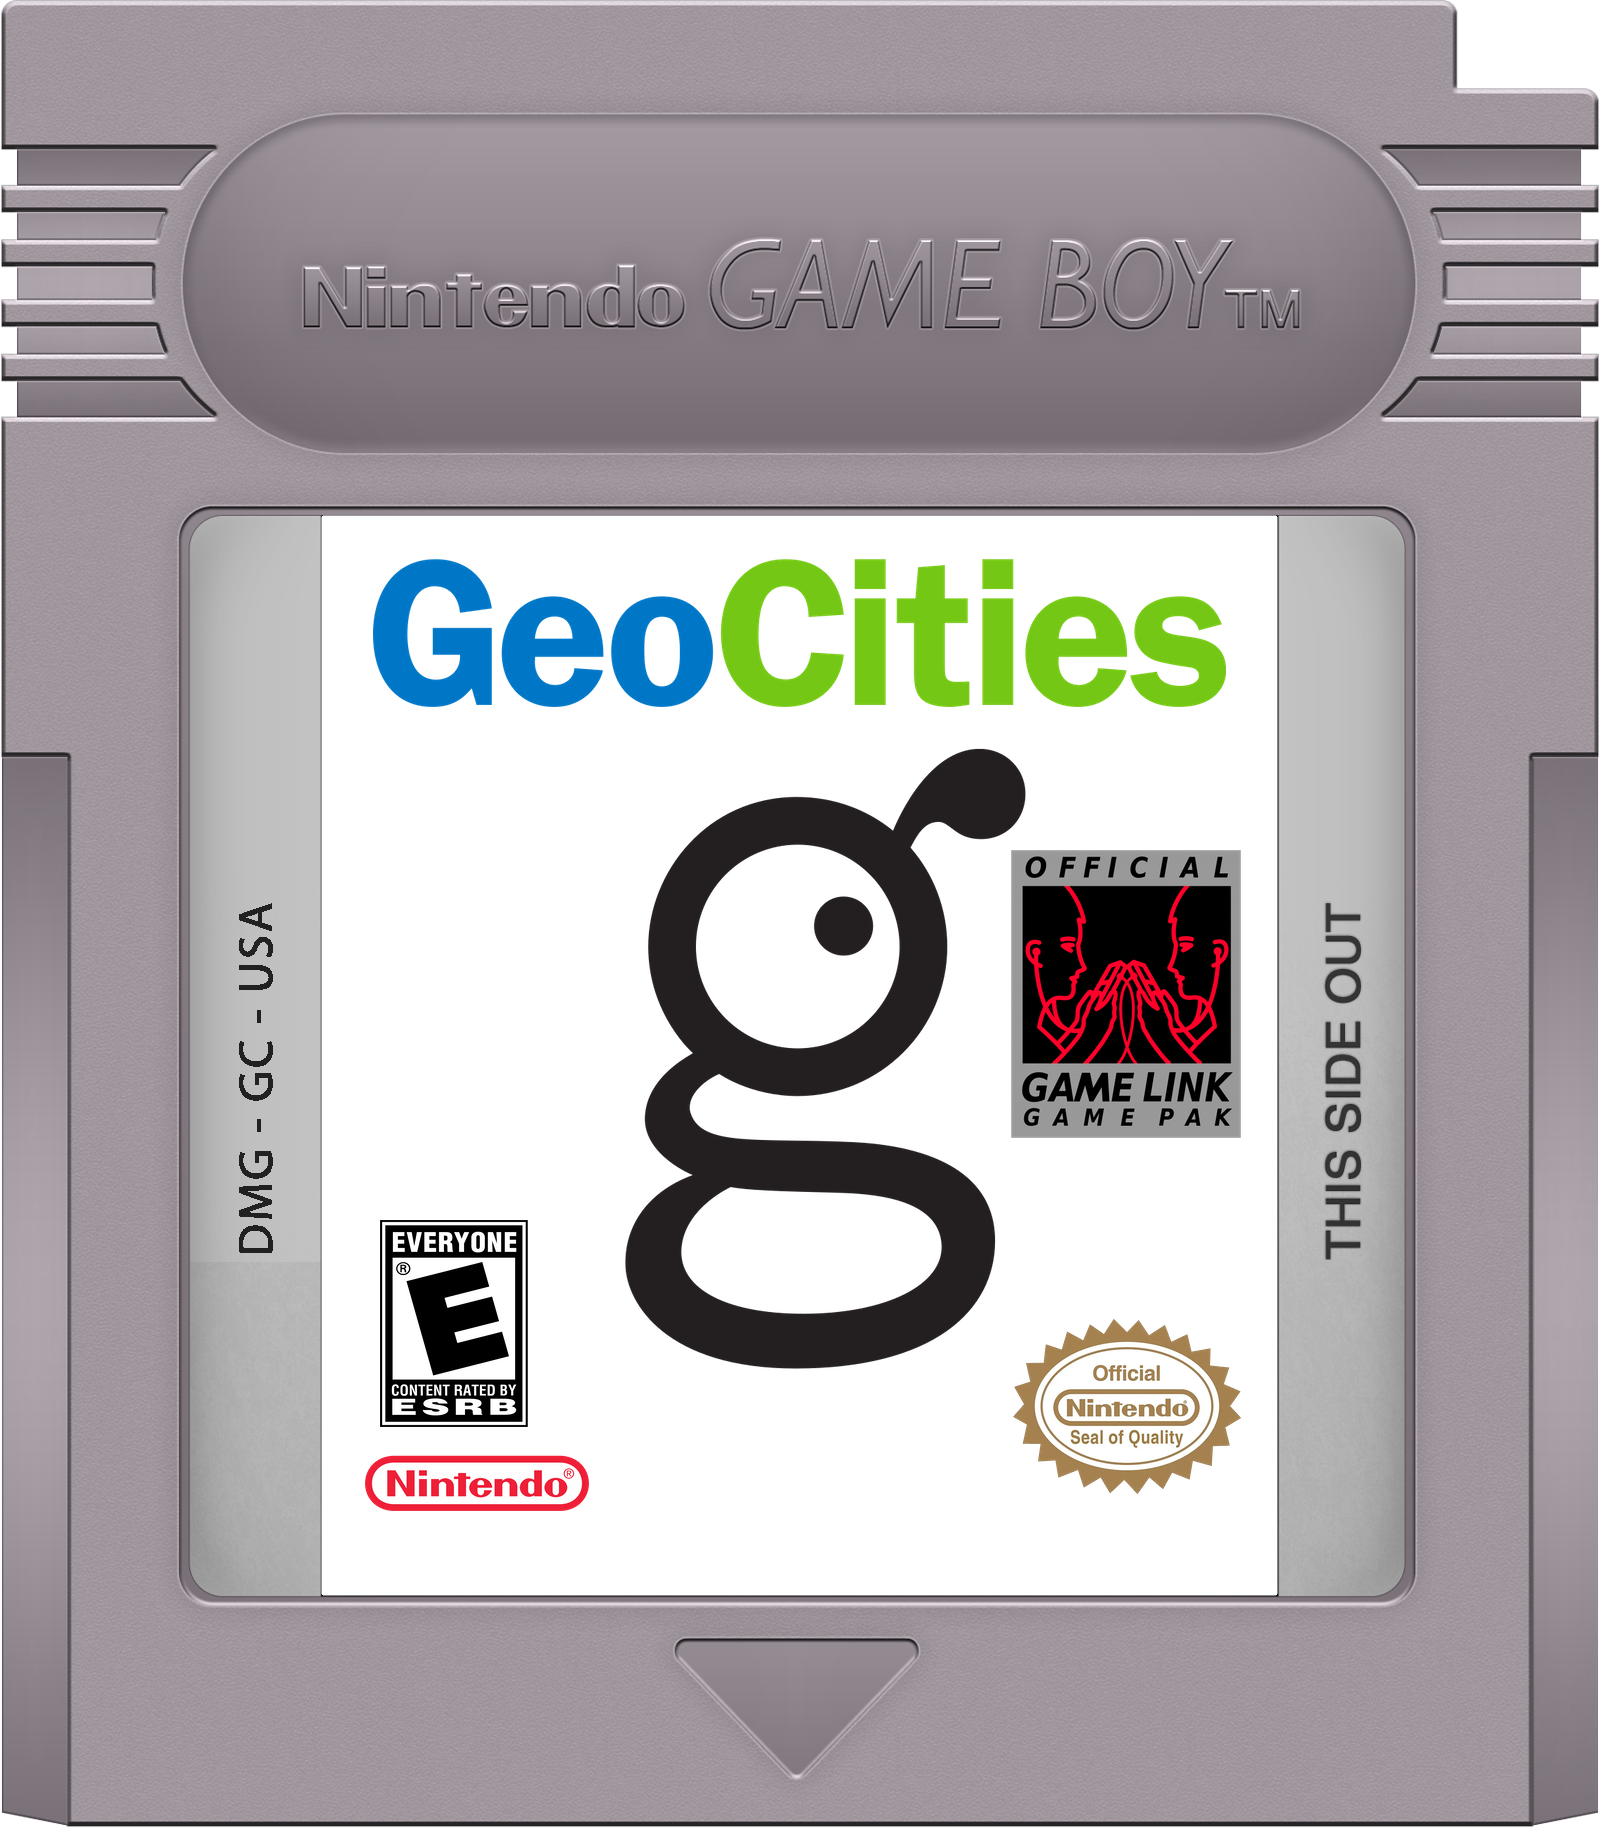 The GeoCities catridge for the Nintendo GameBoy. (Cartridge art by BLUEamnesiac https://www.deviantart.com/blueamnesiac/art/Nintendo-Game-Boy-Cartridge-Silver-457938898)